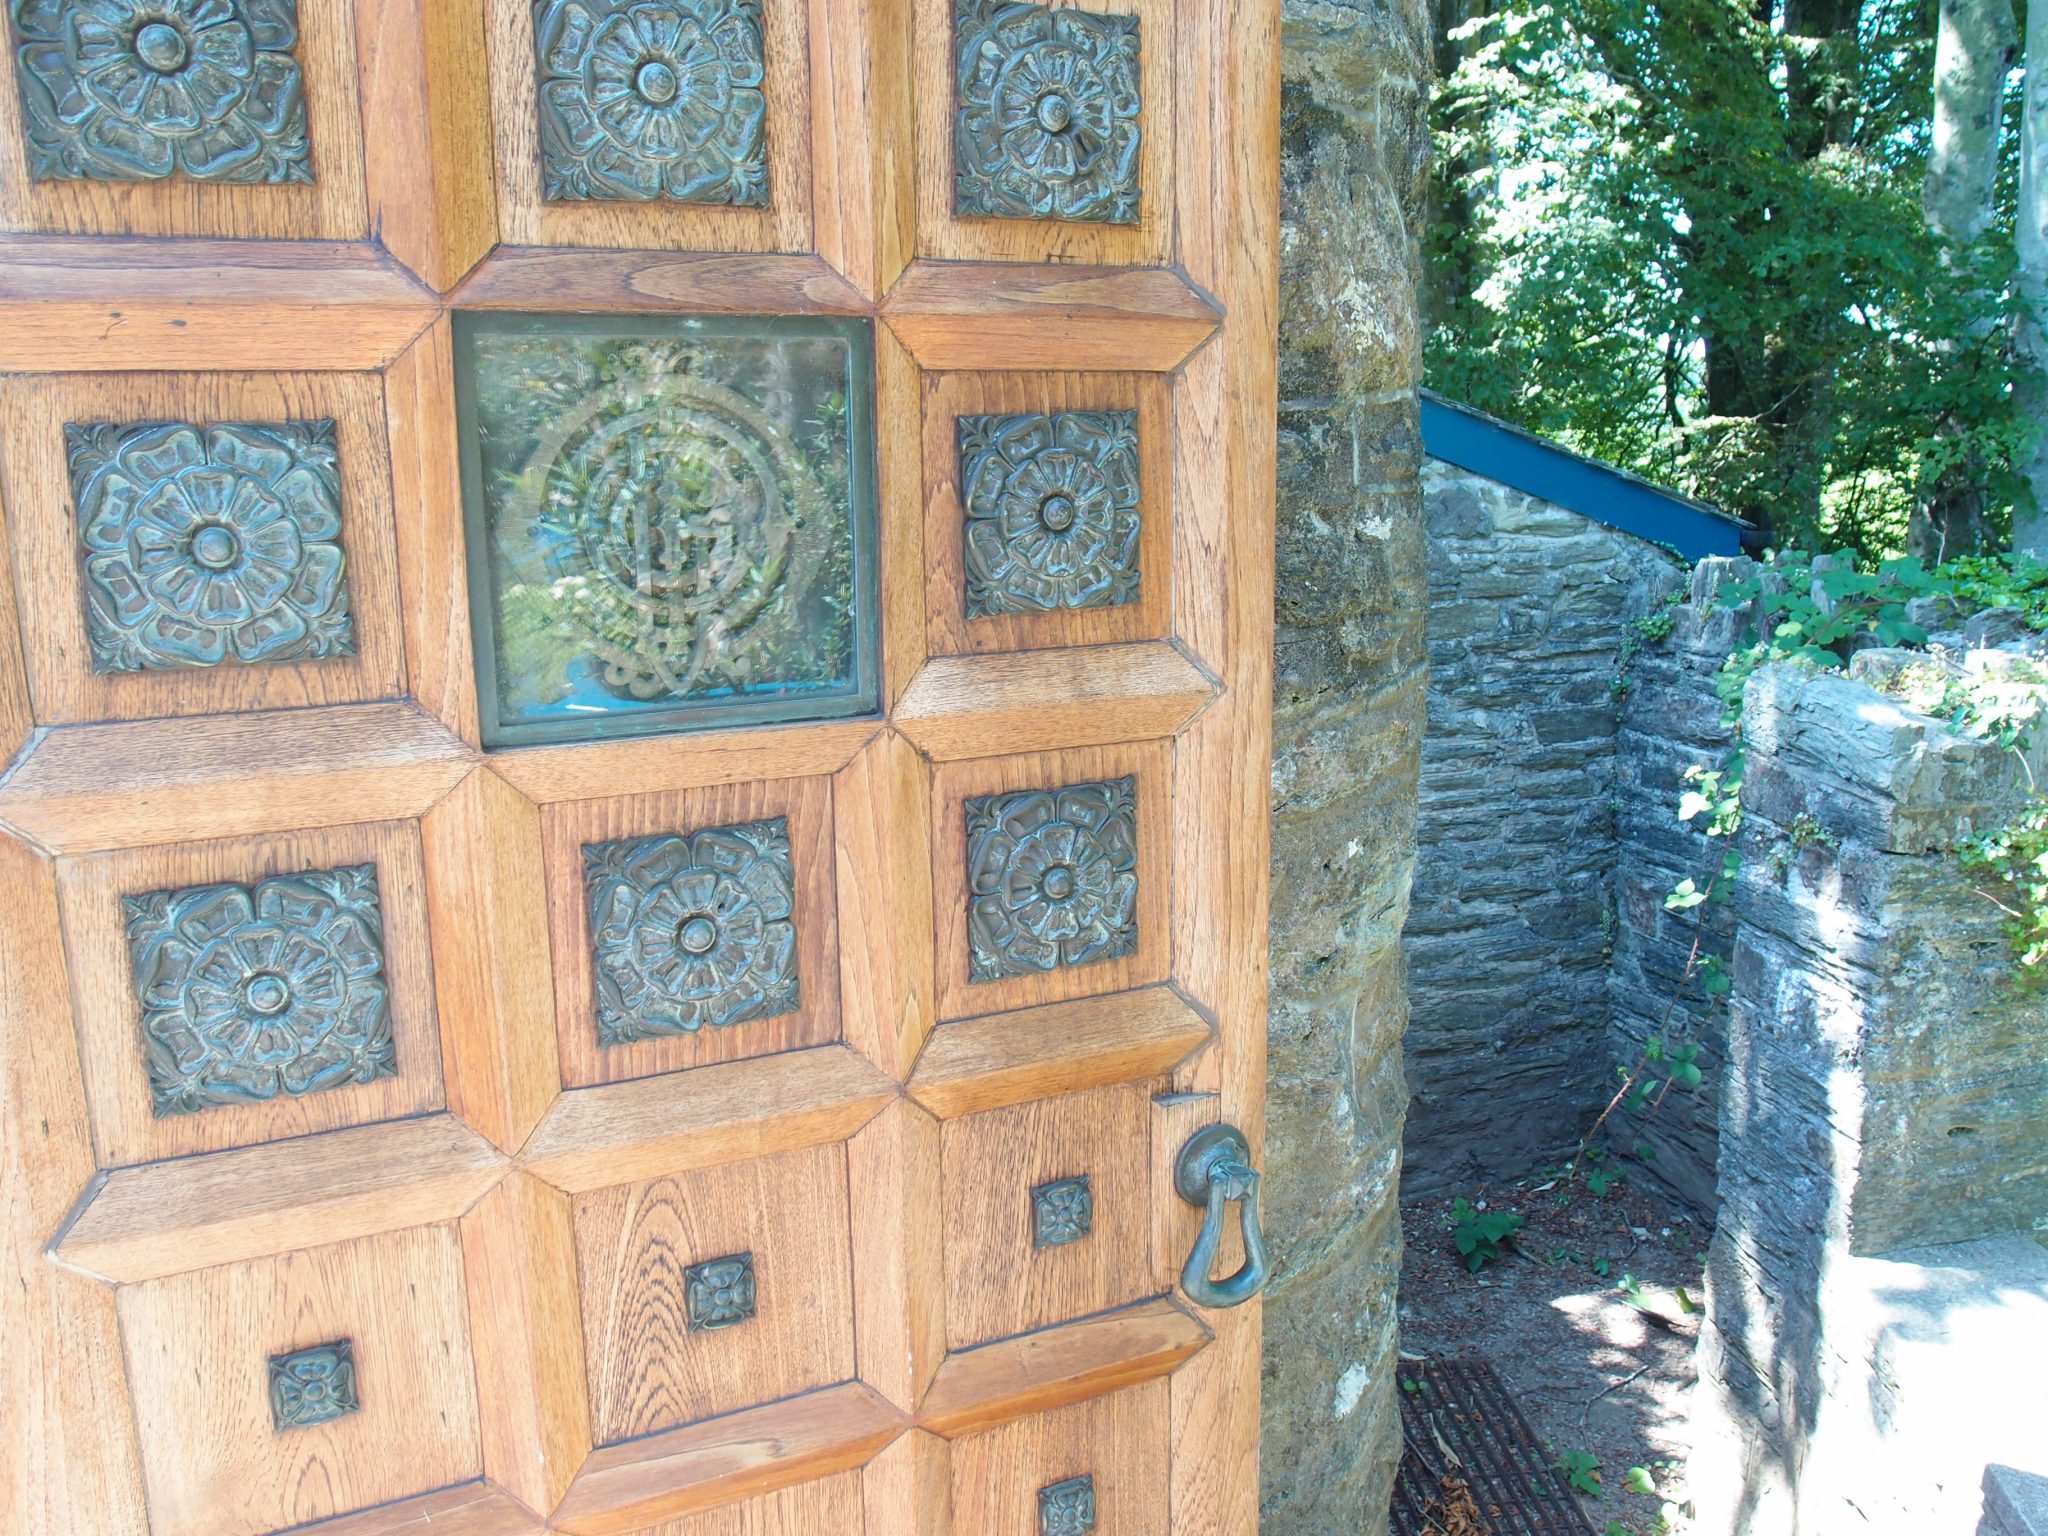 Detail of Main Gate